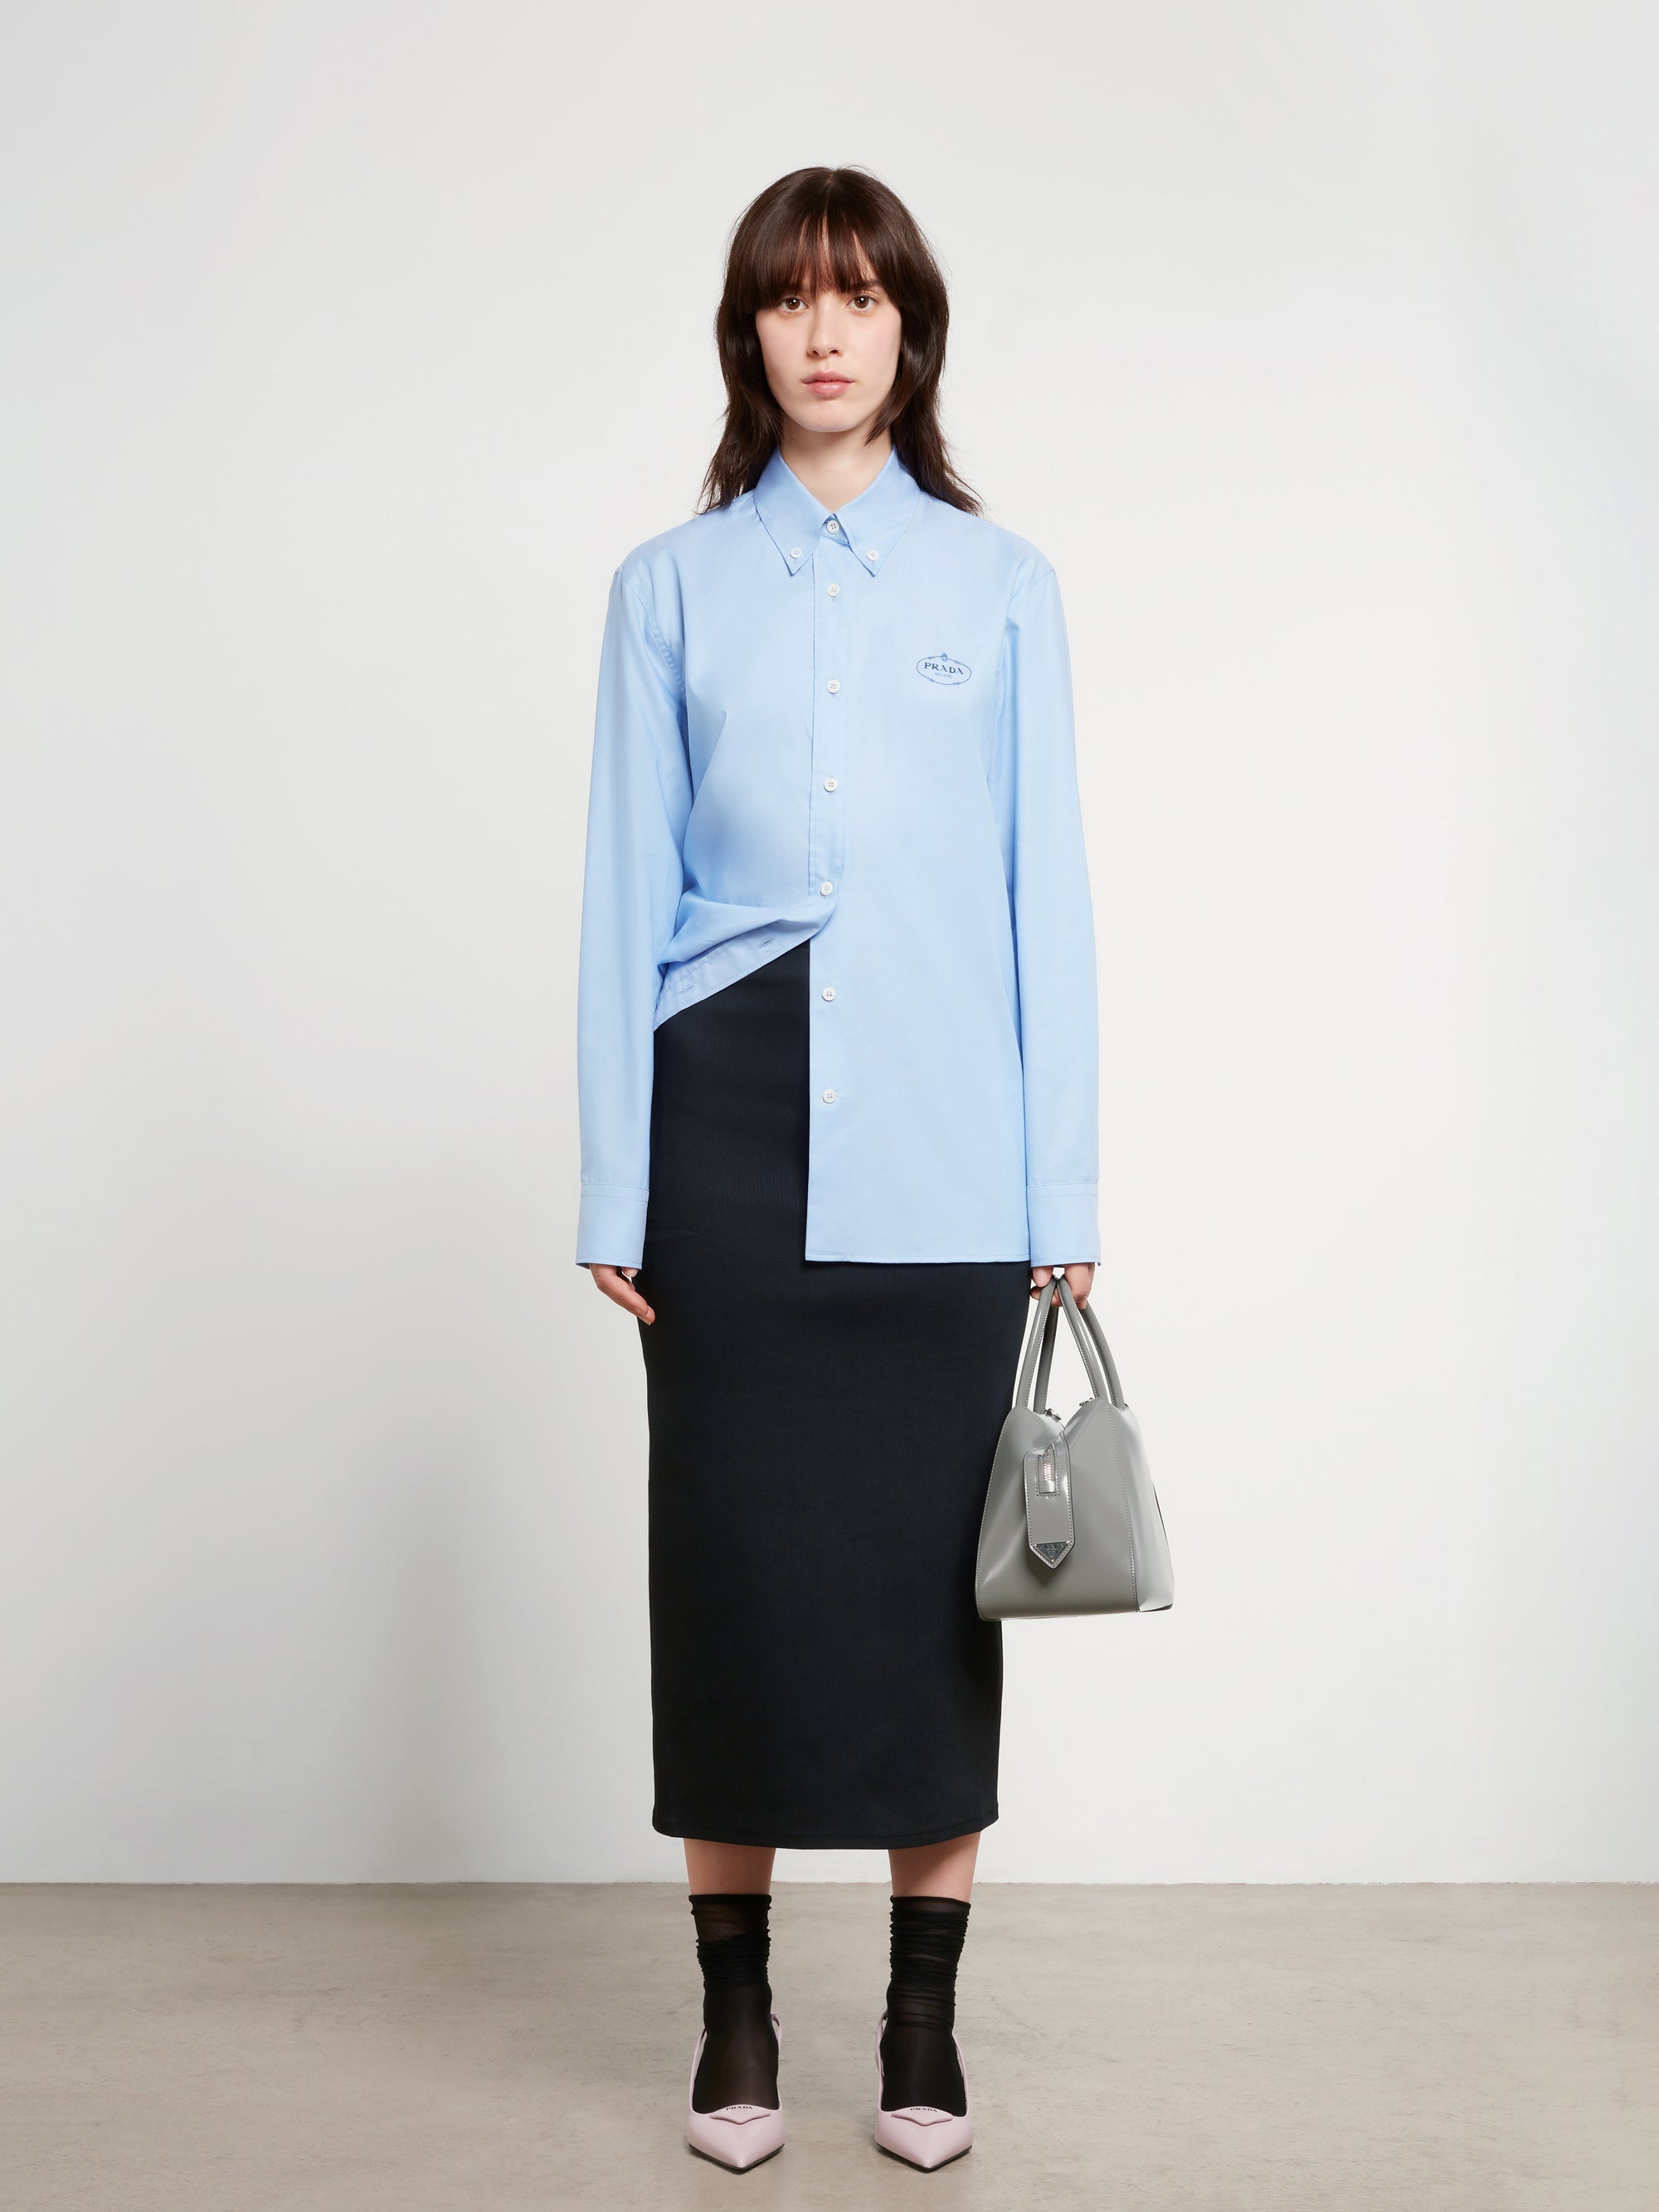 Prada - Women’s Oxford Cotton Shirt - (Light Blue) view 4